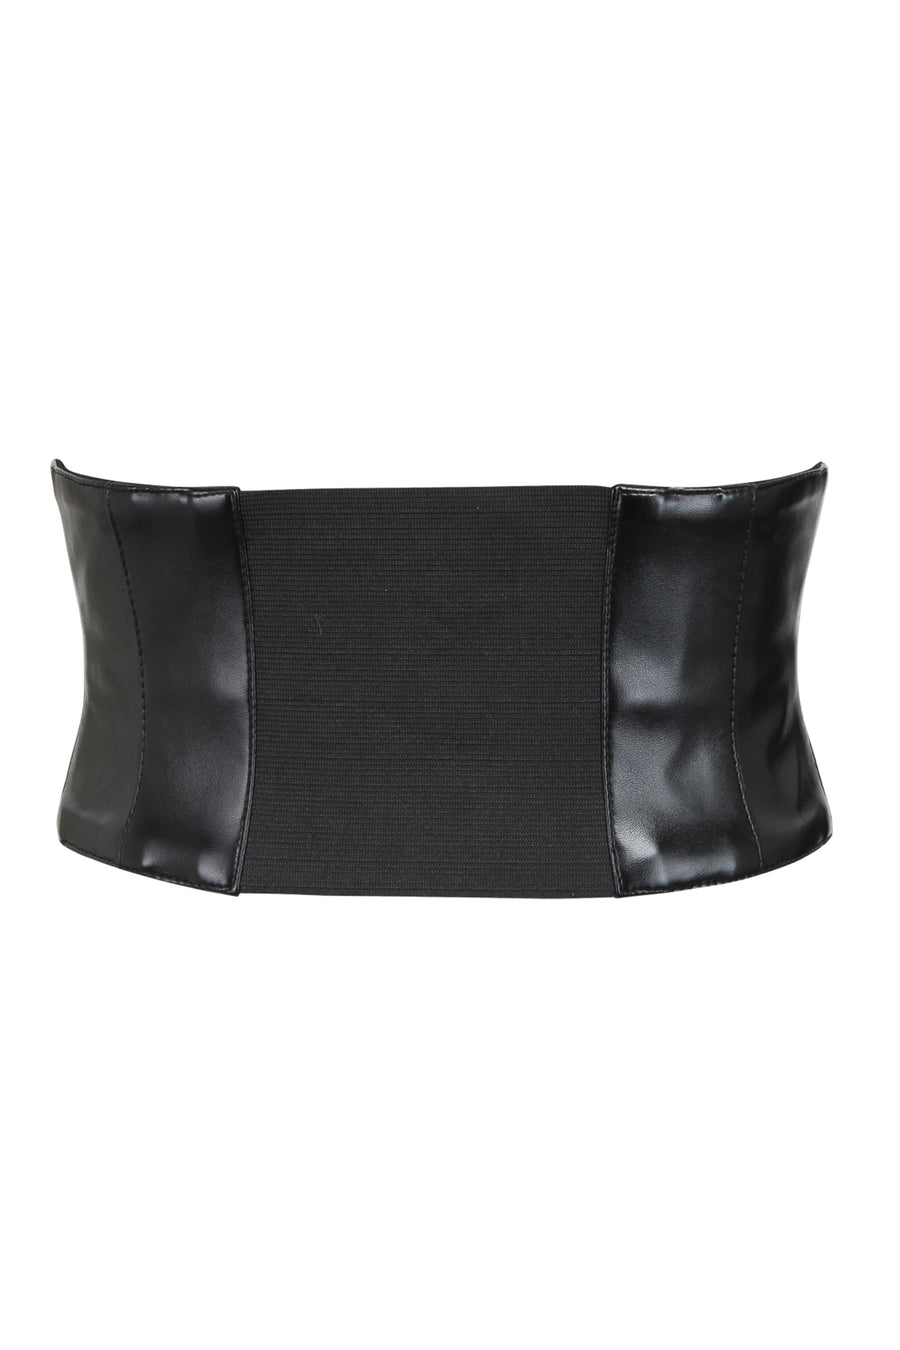 Black Faux Leather or PVC Neck Corset/choker 